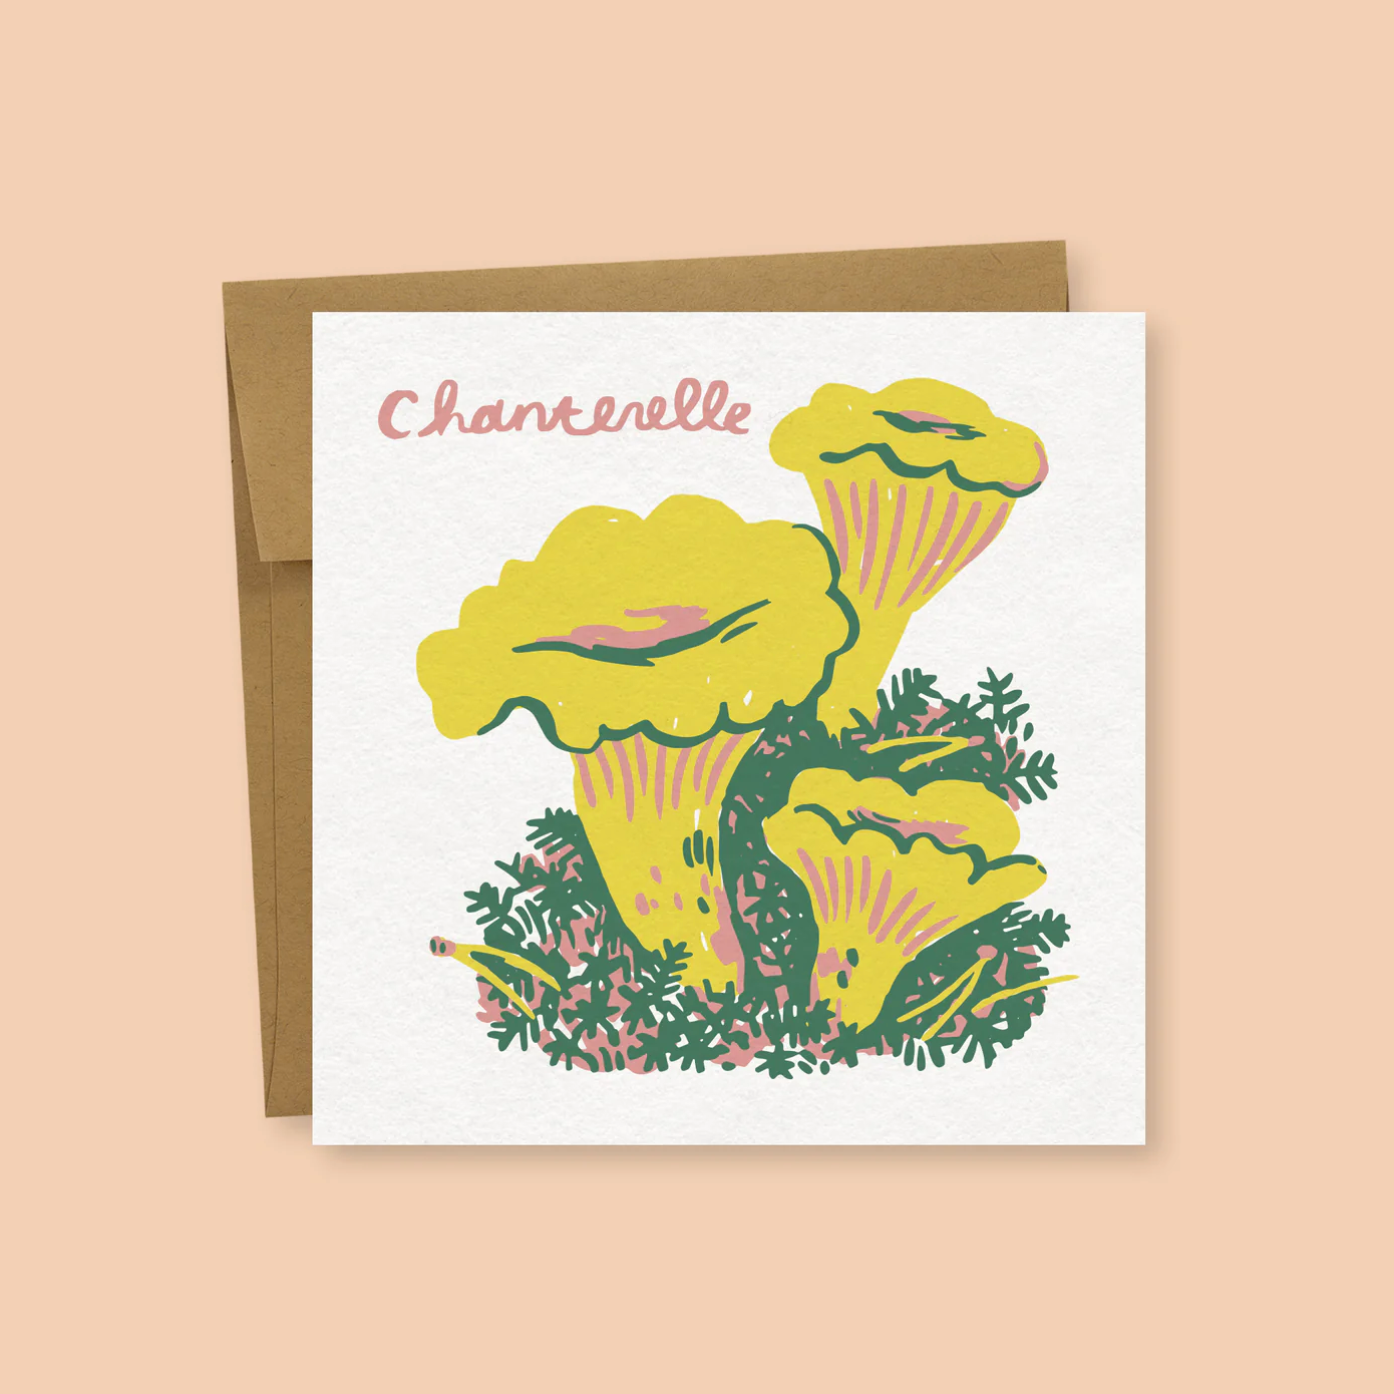 Chantrelle Mushroom Greeting Card